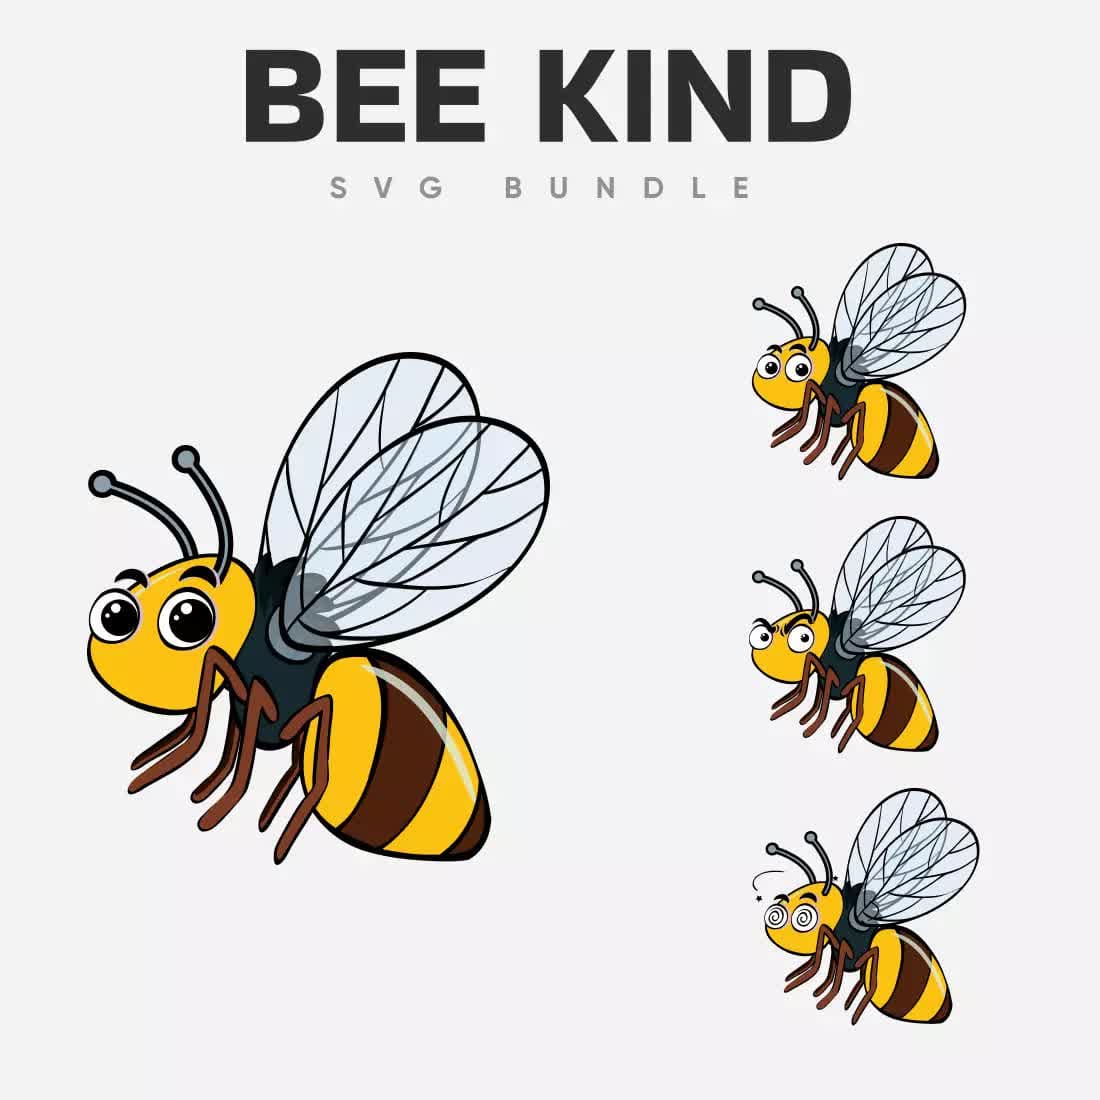 Bee Kind SVG Bundle Preview 4.